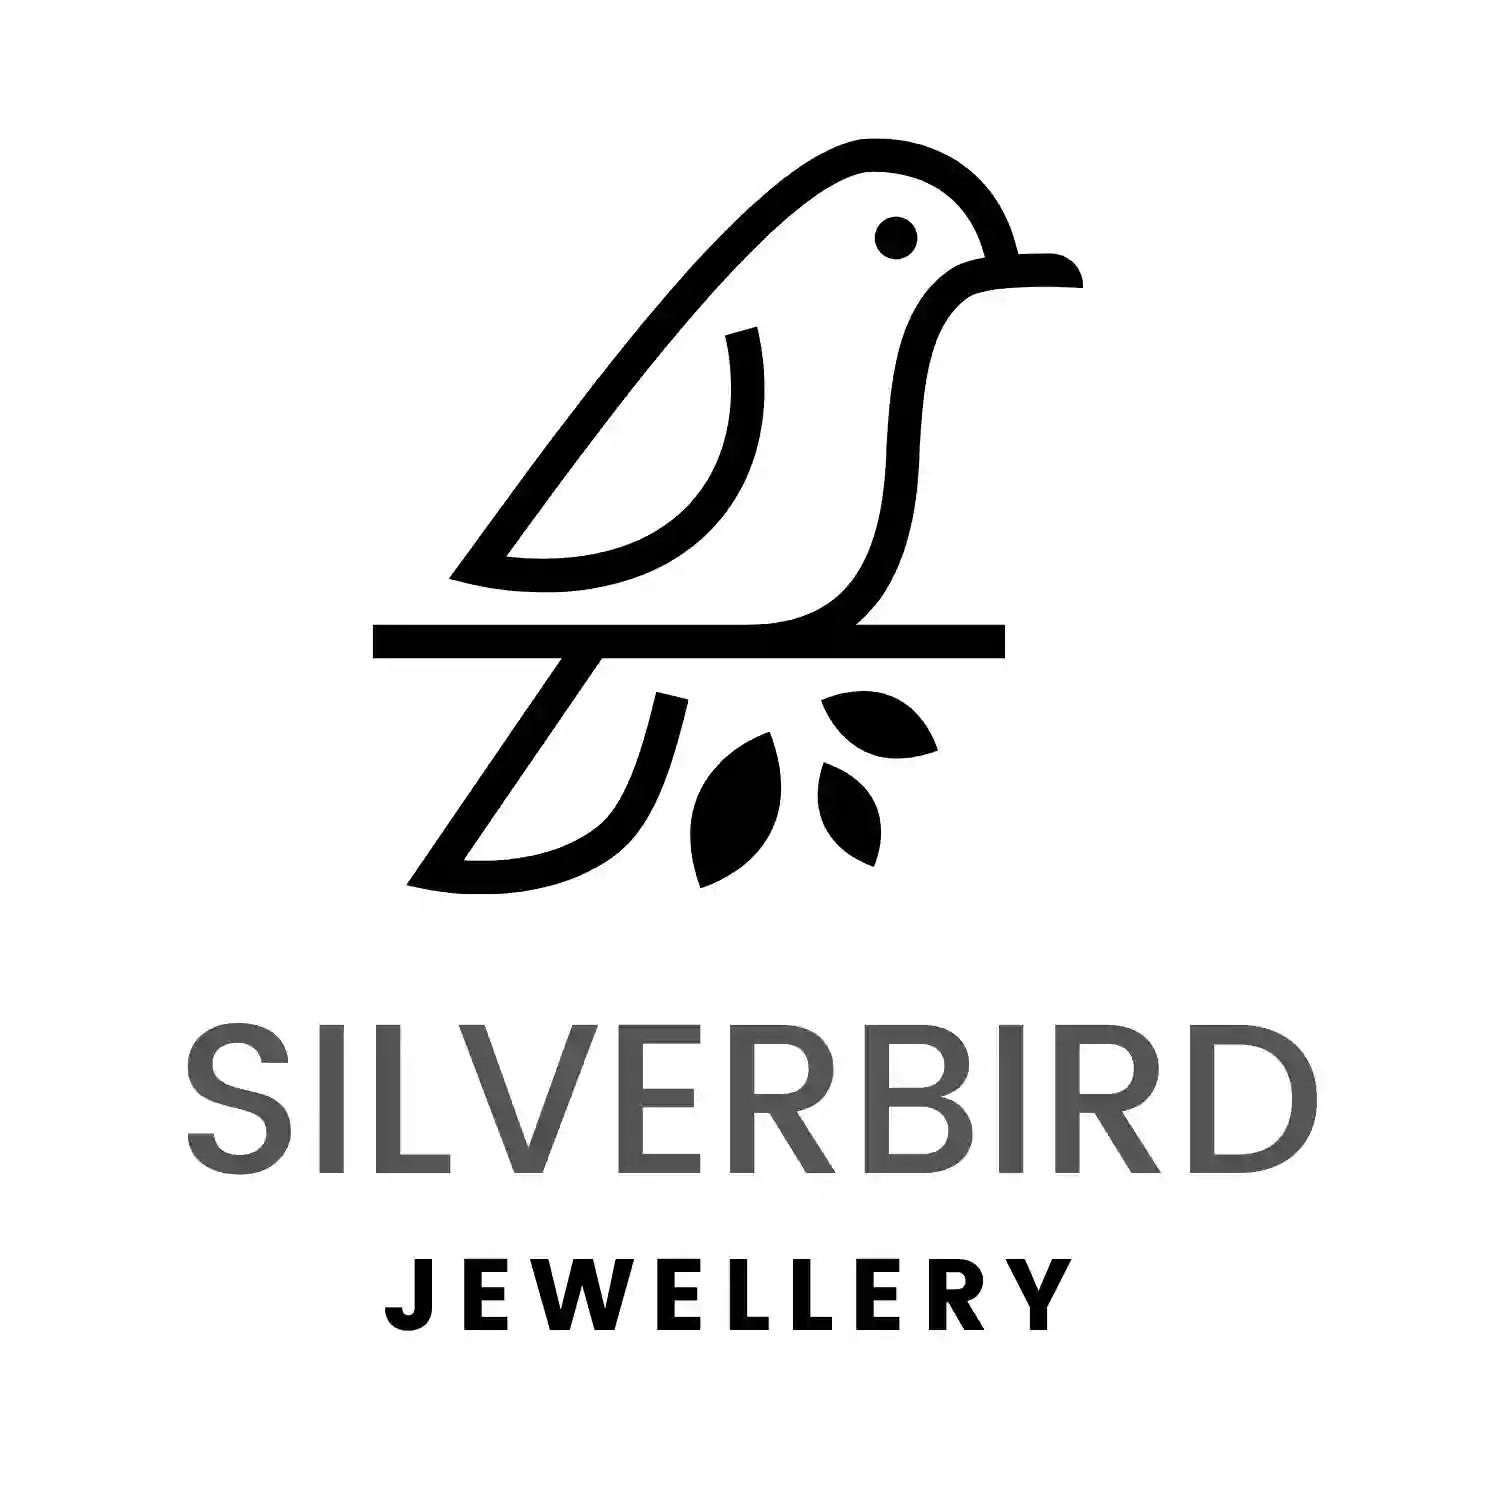 Silverbird Jewellery